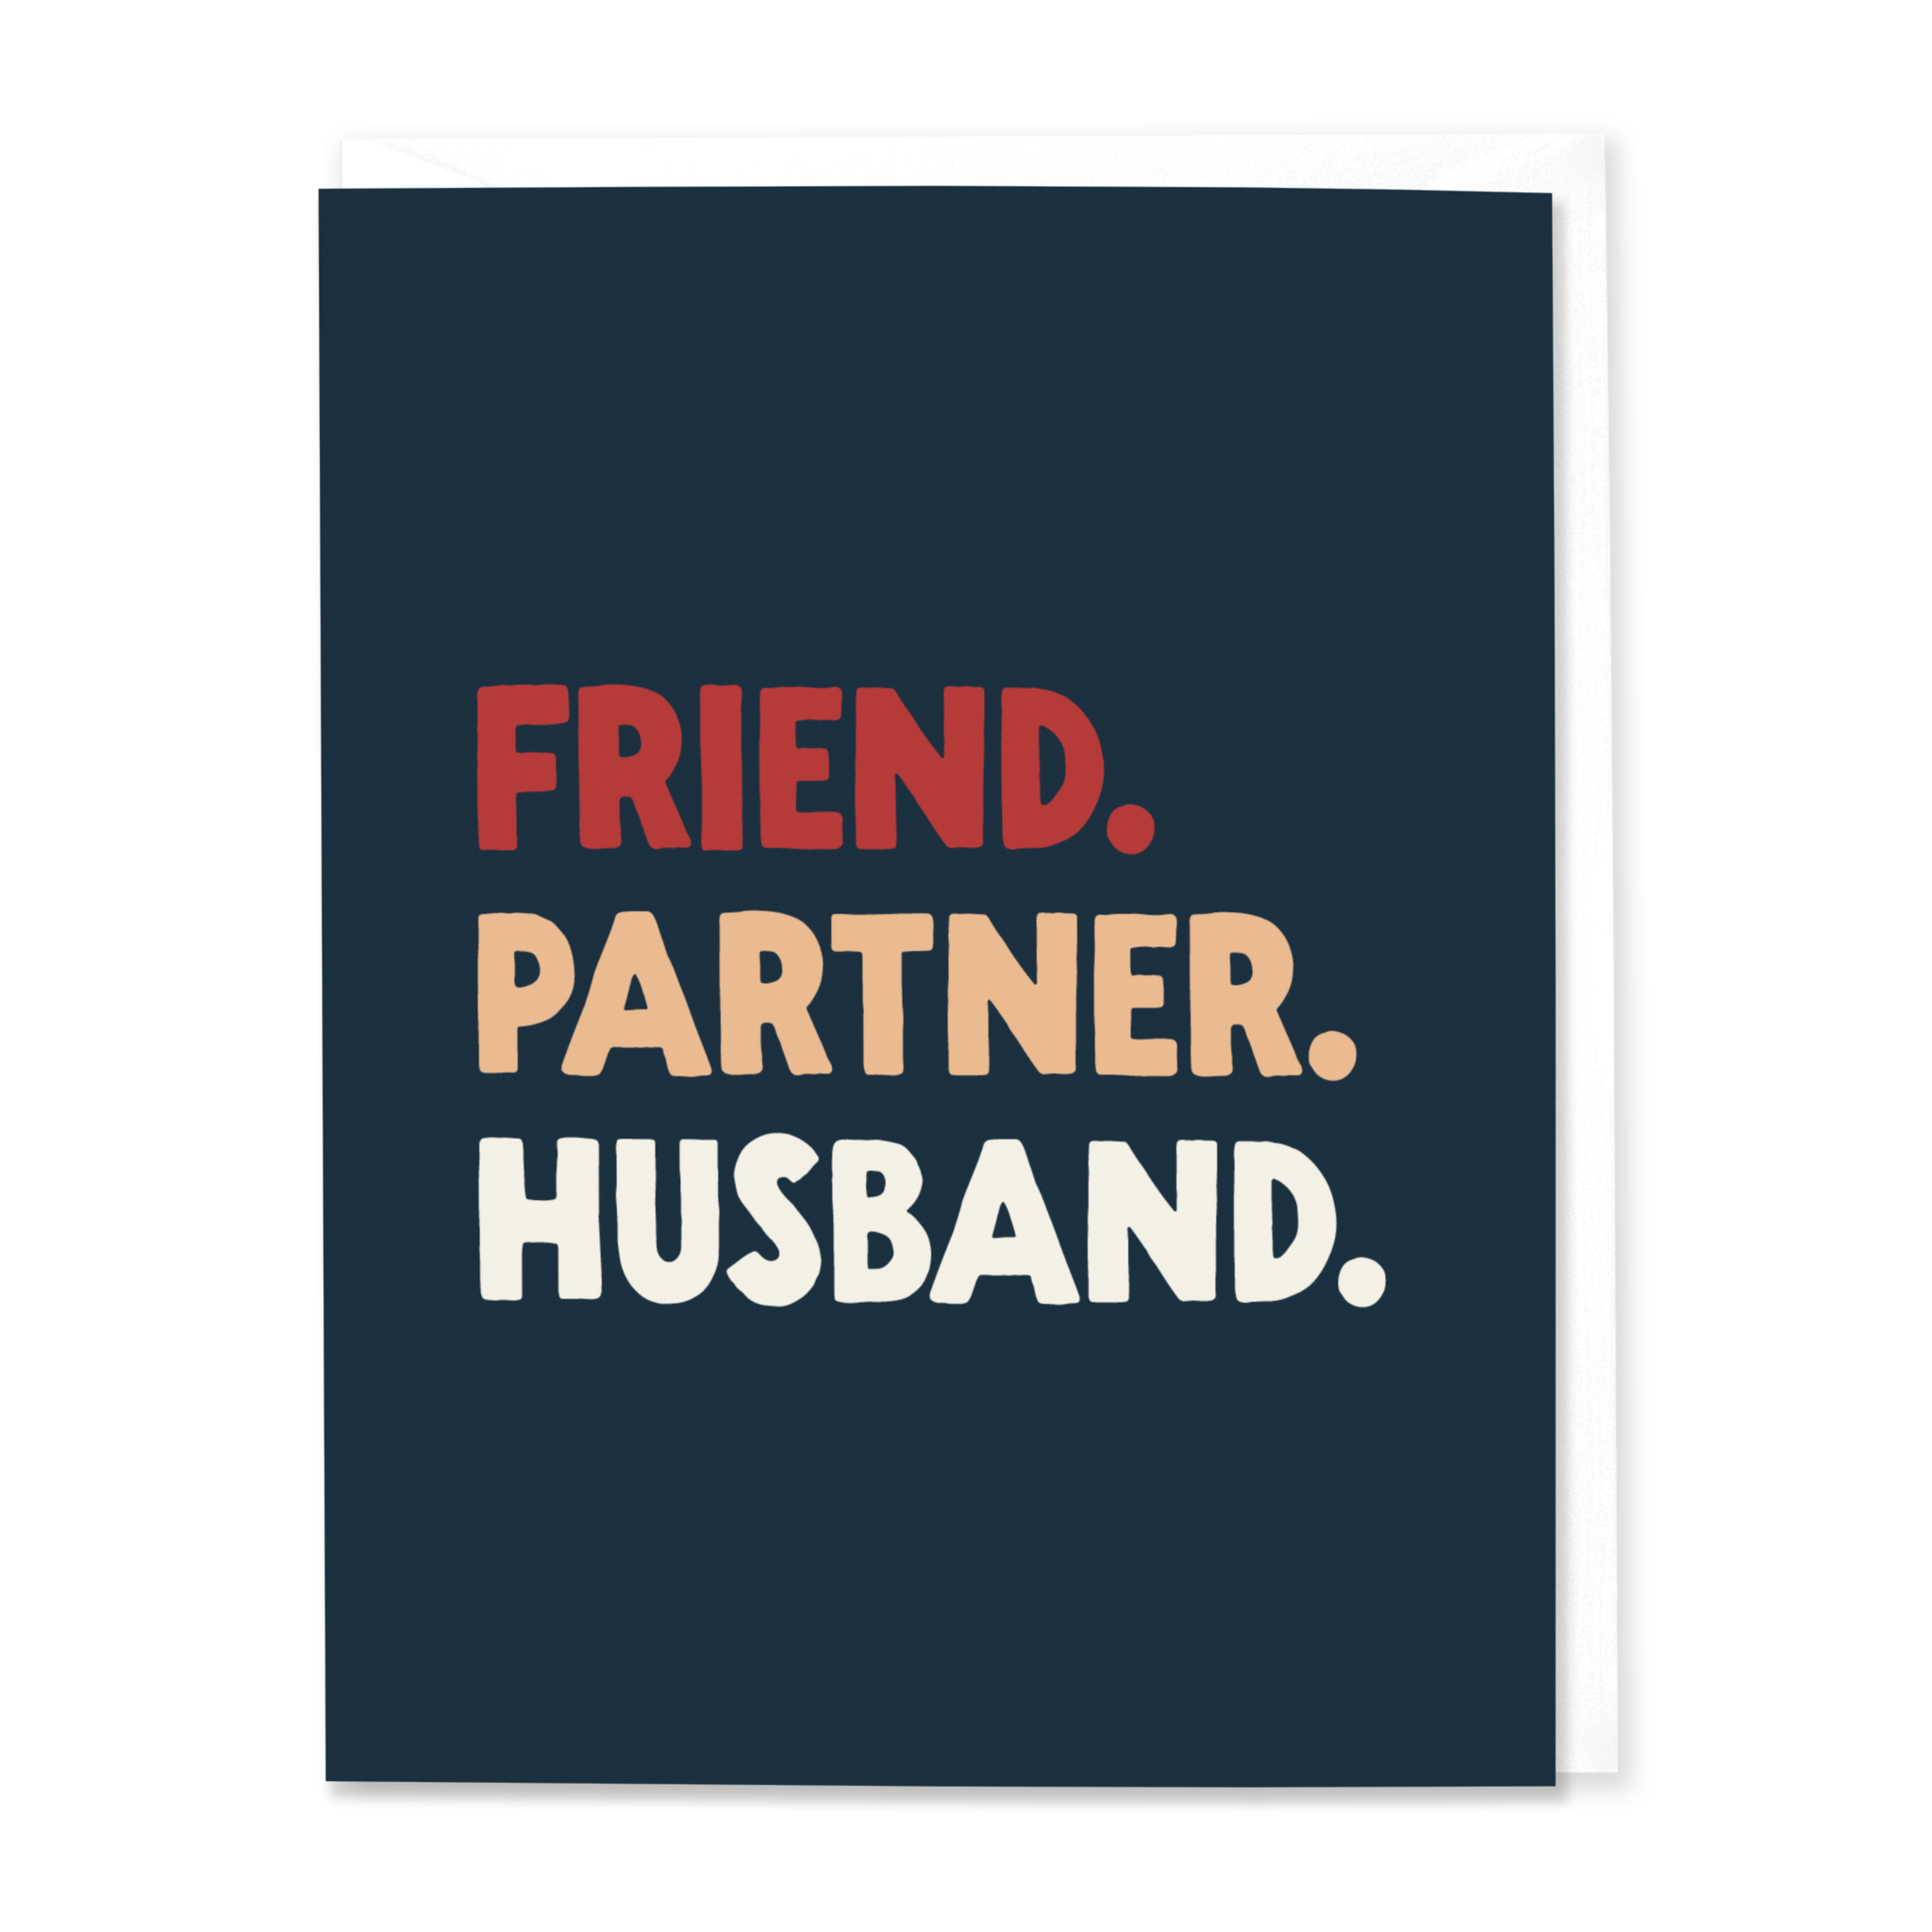 Friend. Partner. Husband.